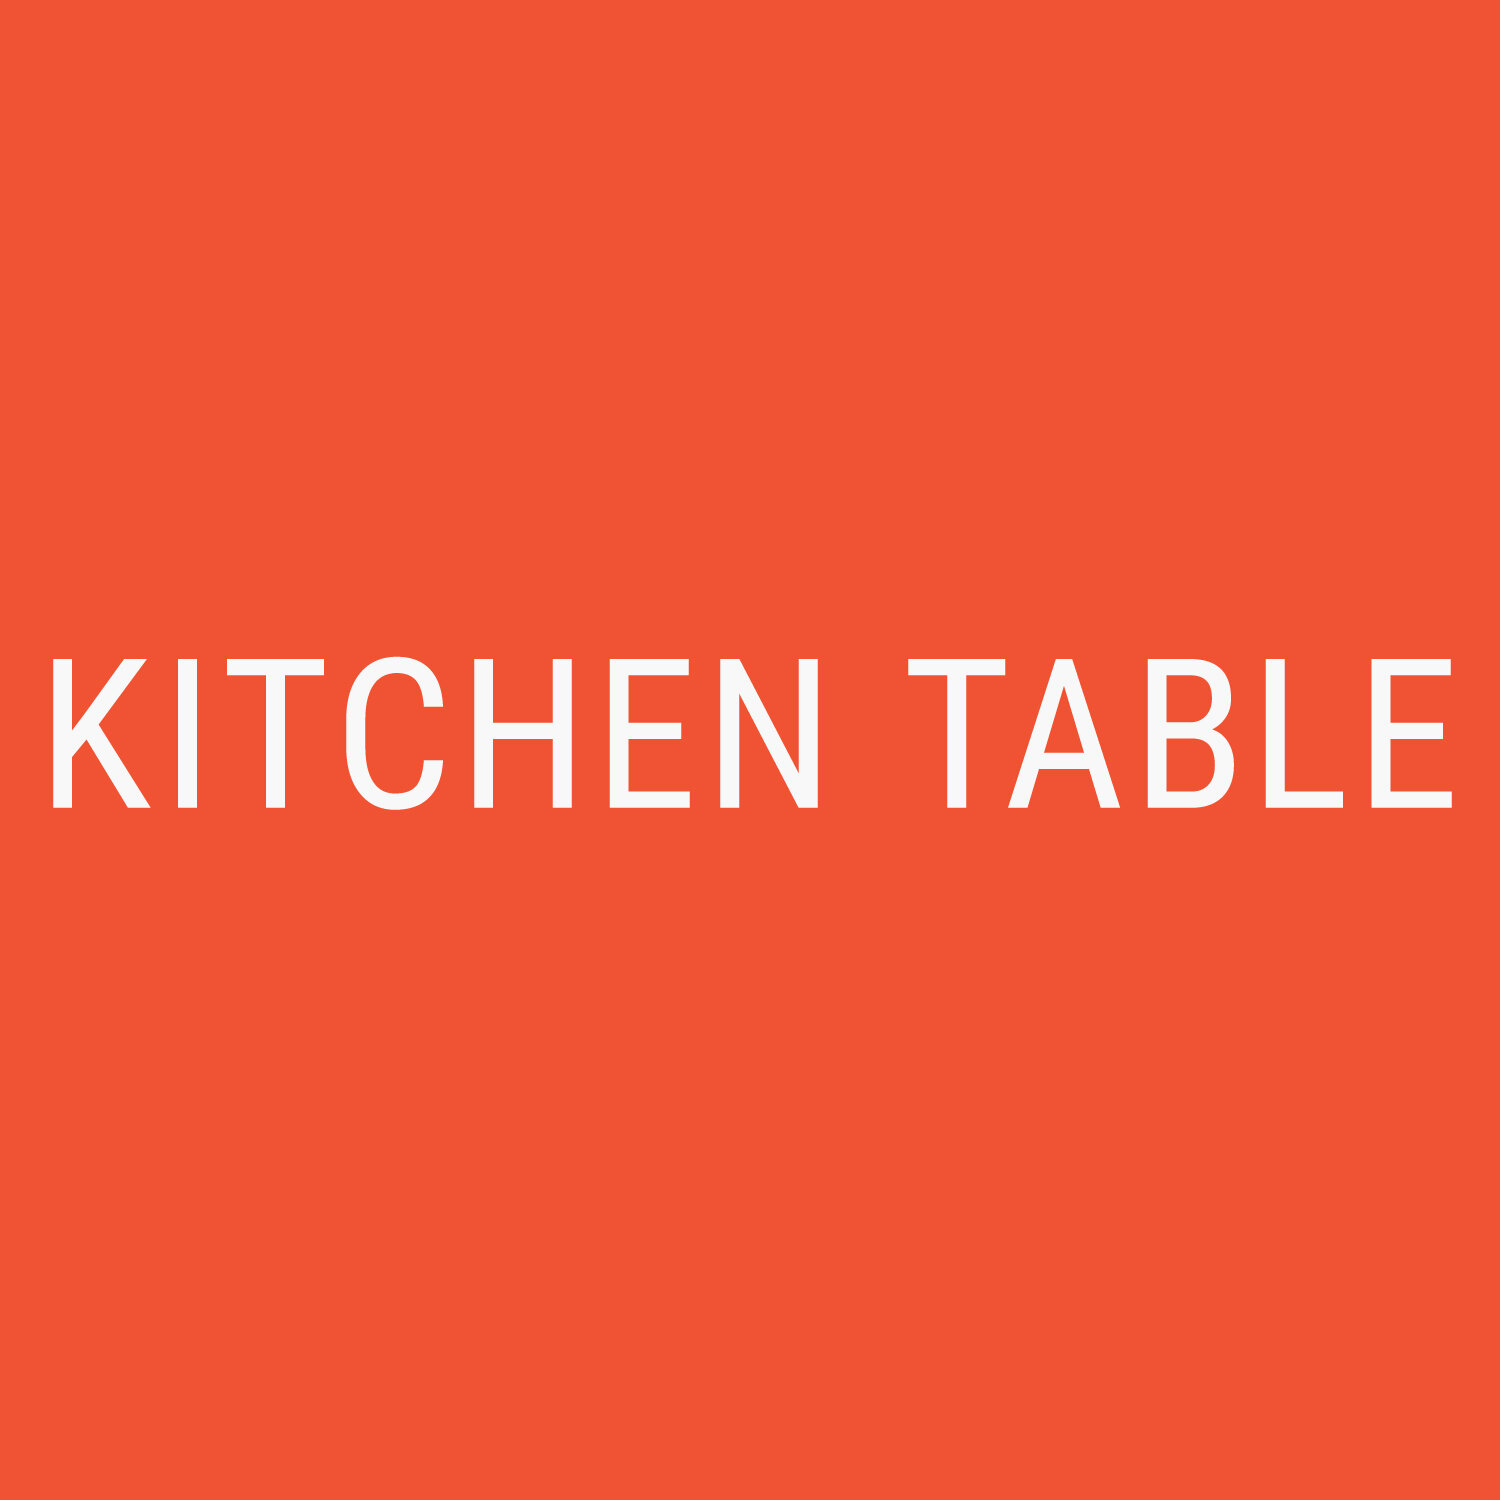 Kitchen Table Logo_1500x1500_brightorange.jpg